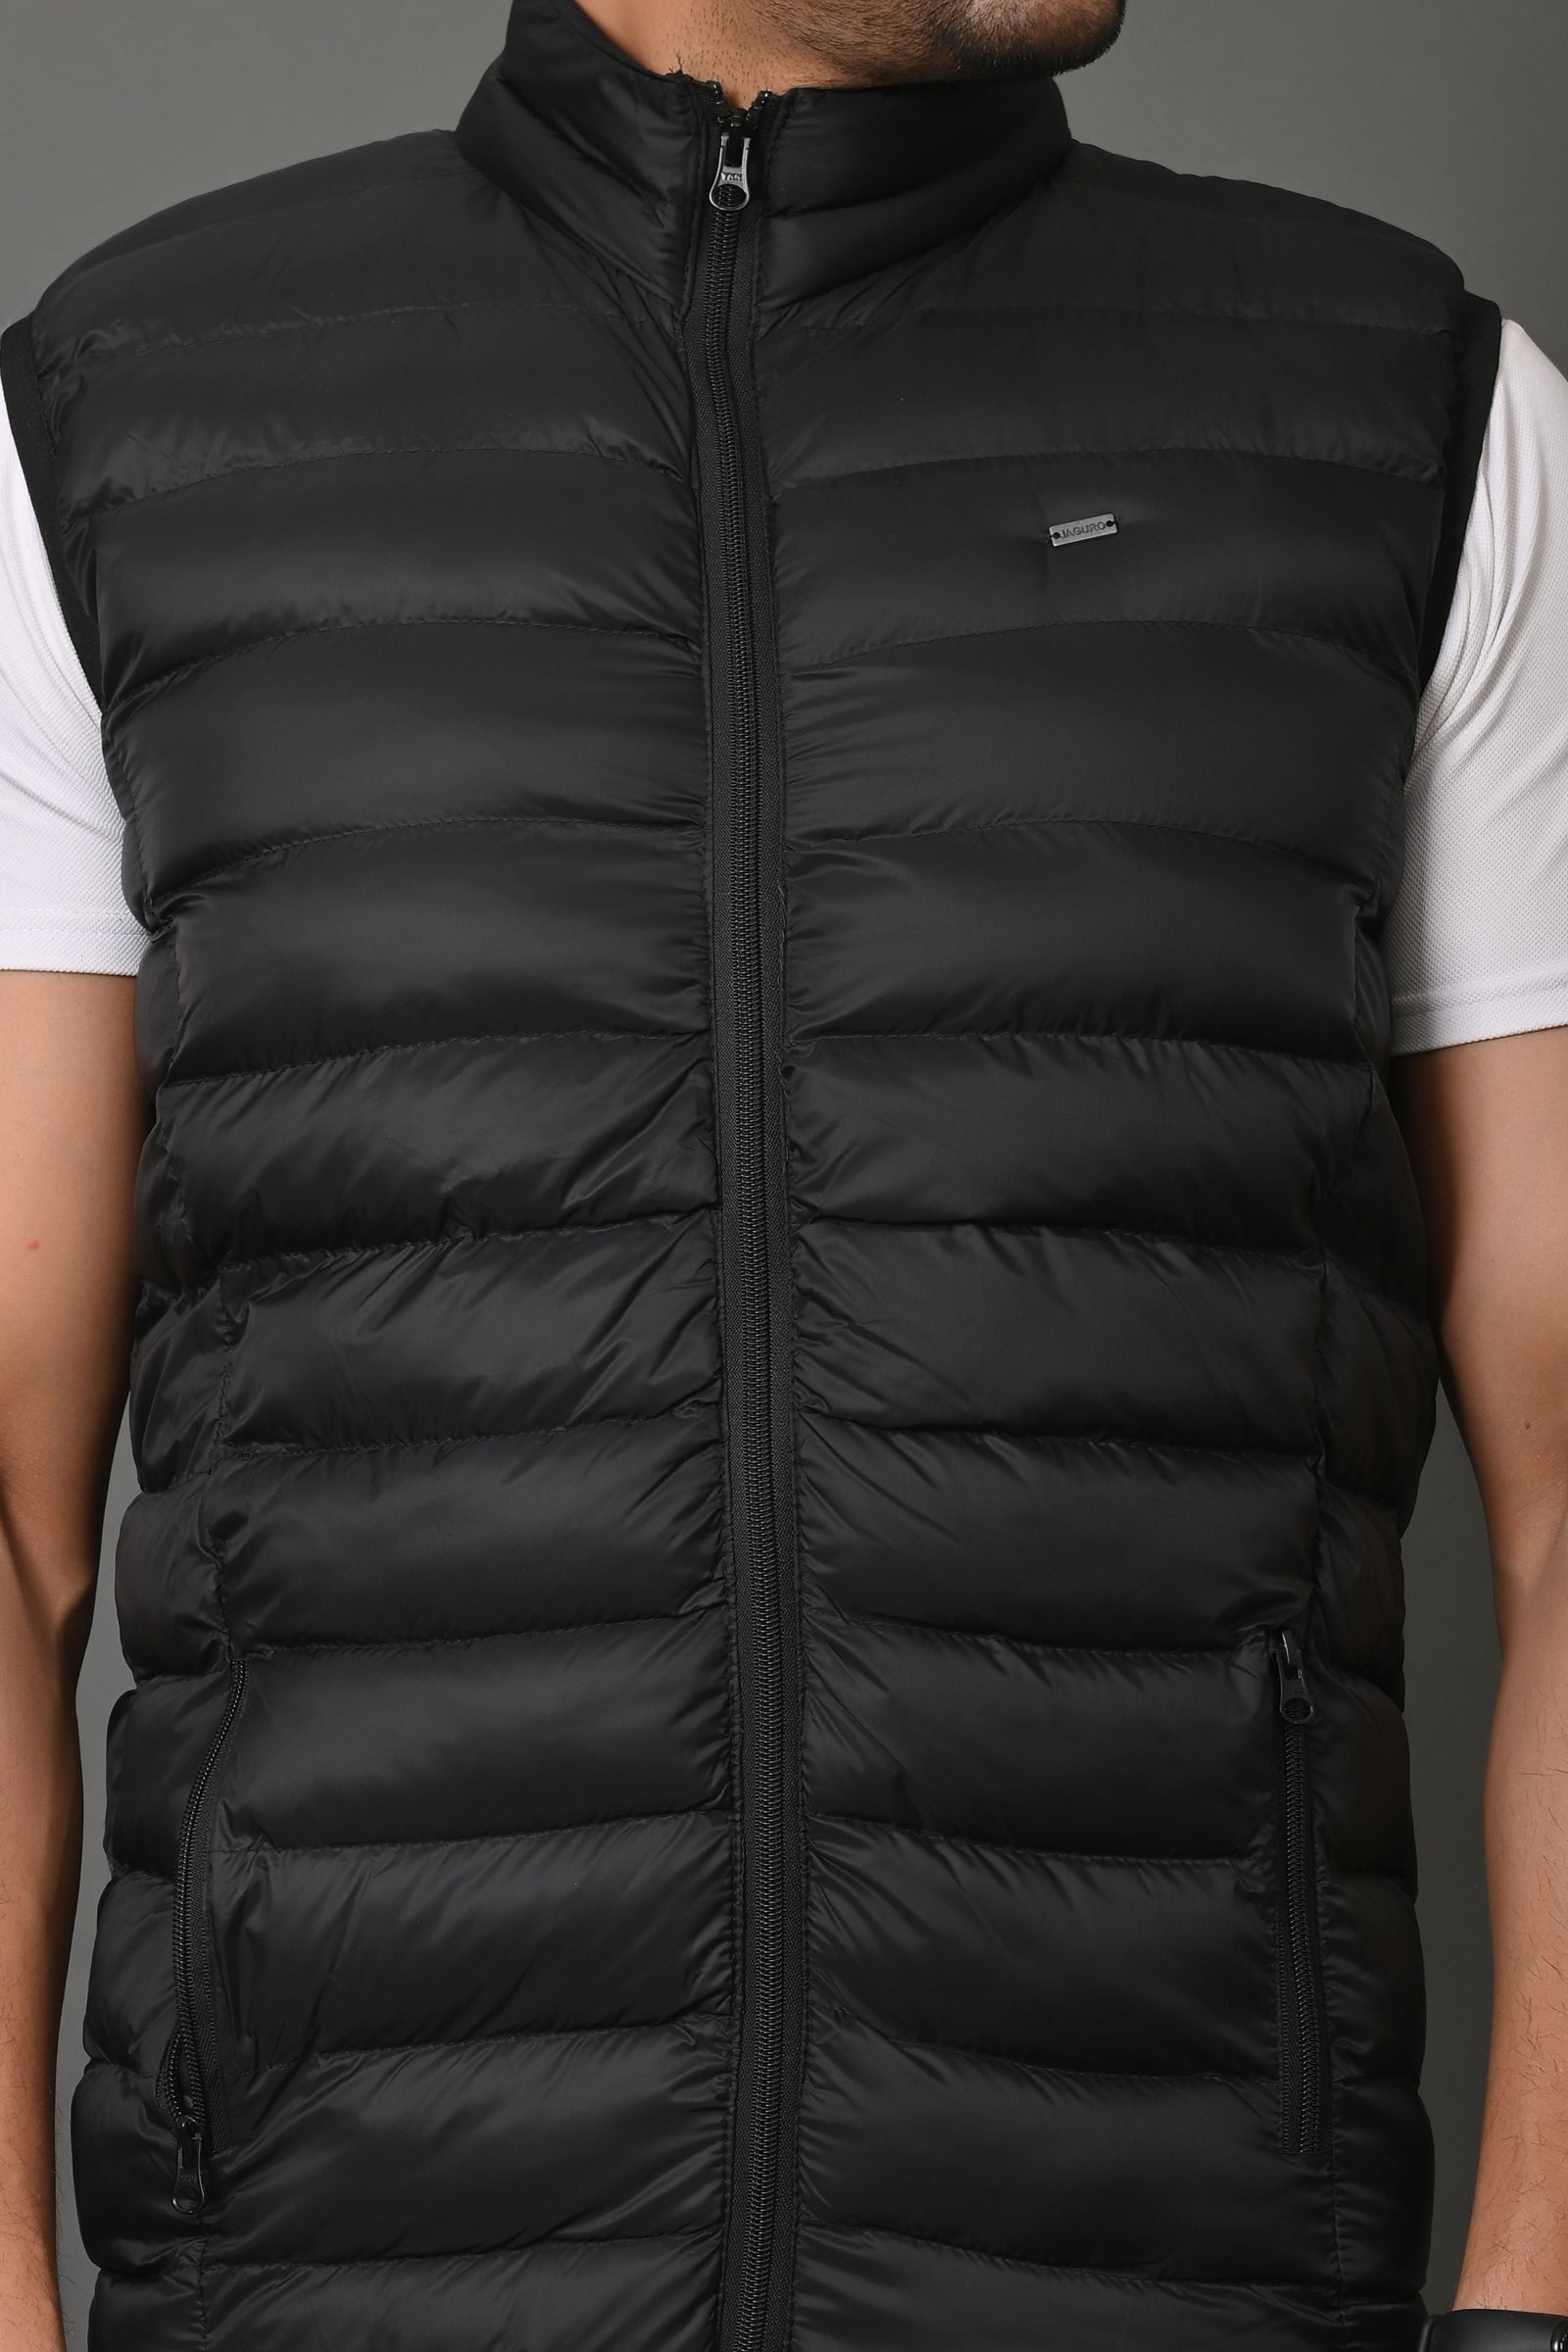 JAGURO Men's Stylish Sleeveless Bomber Jacket For Winter